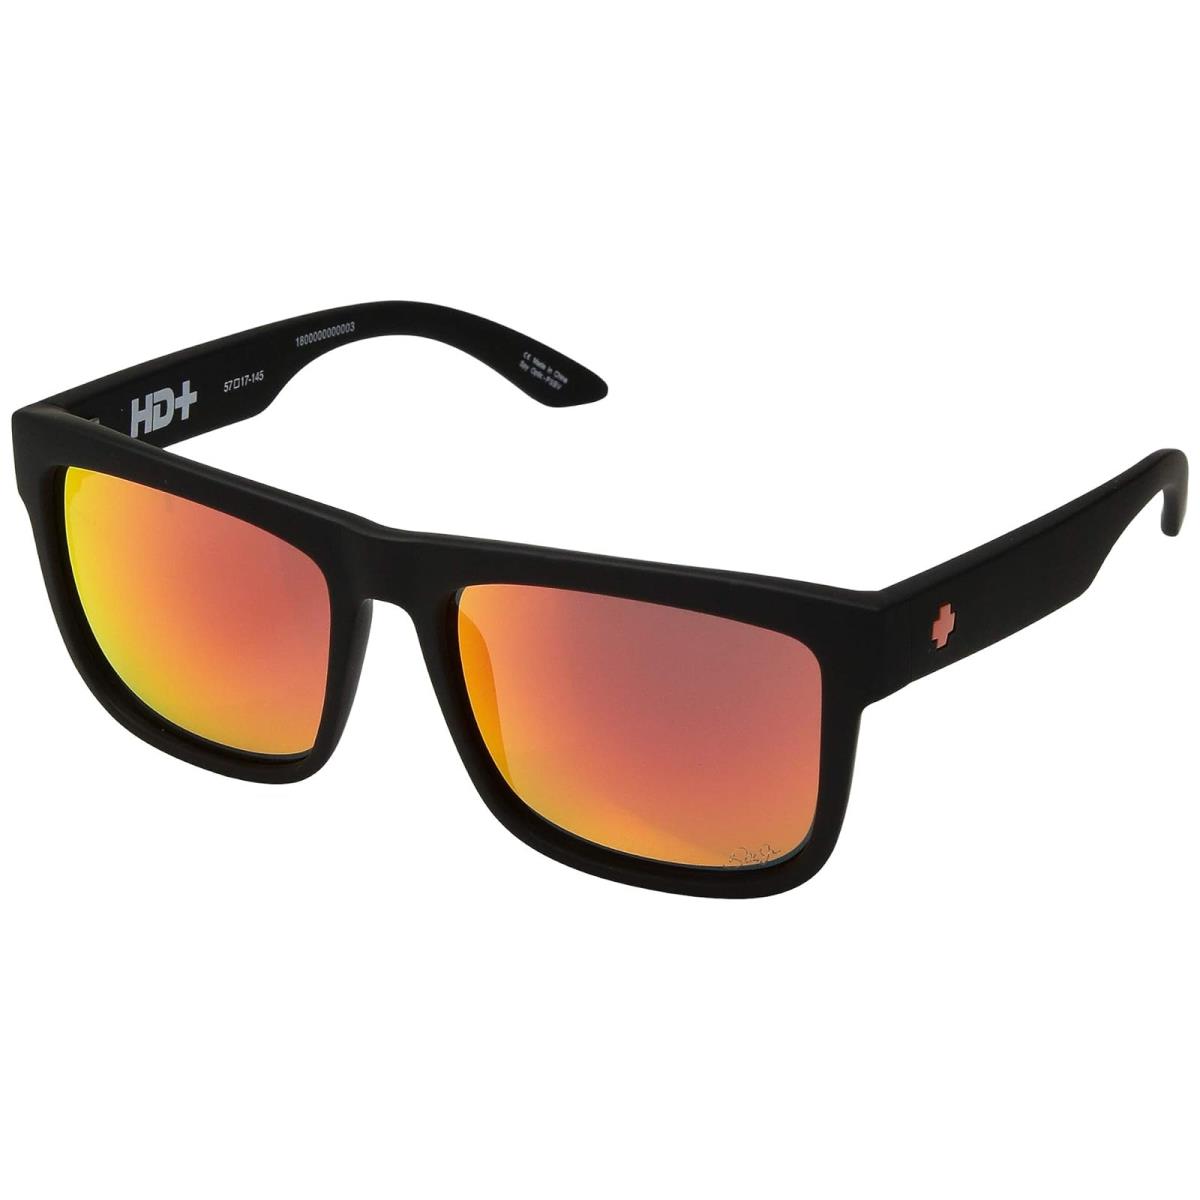 Unisex Sunglasses Spy Optic Discord Dale Jr/Matte Black/HD Plus Gray Green/Orange Spectra Mirror